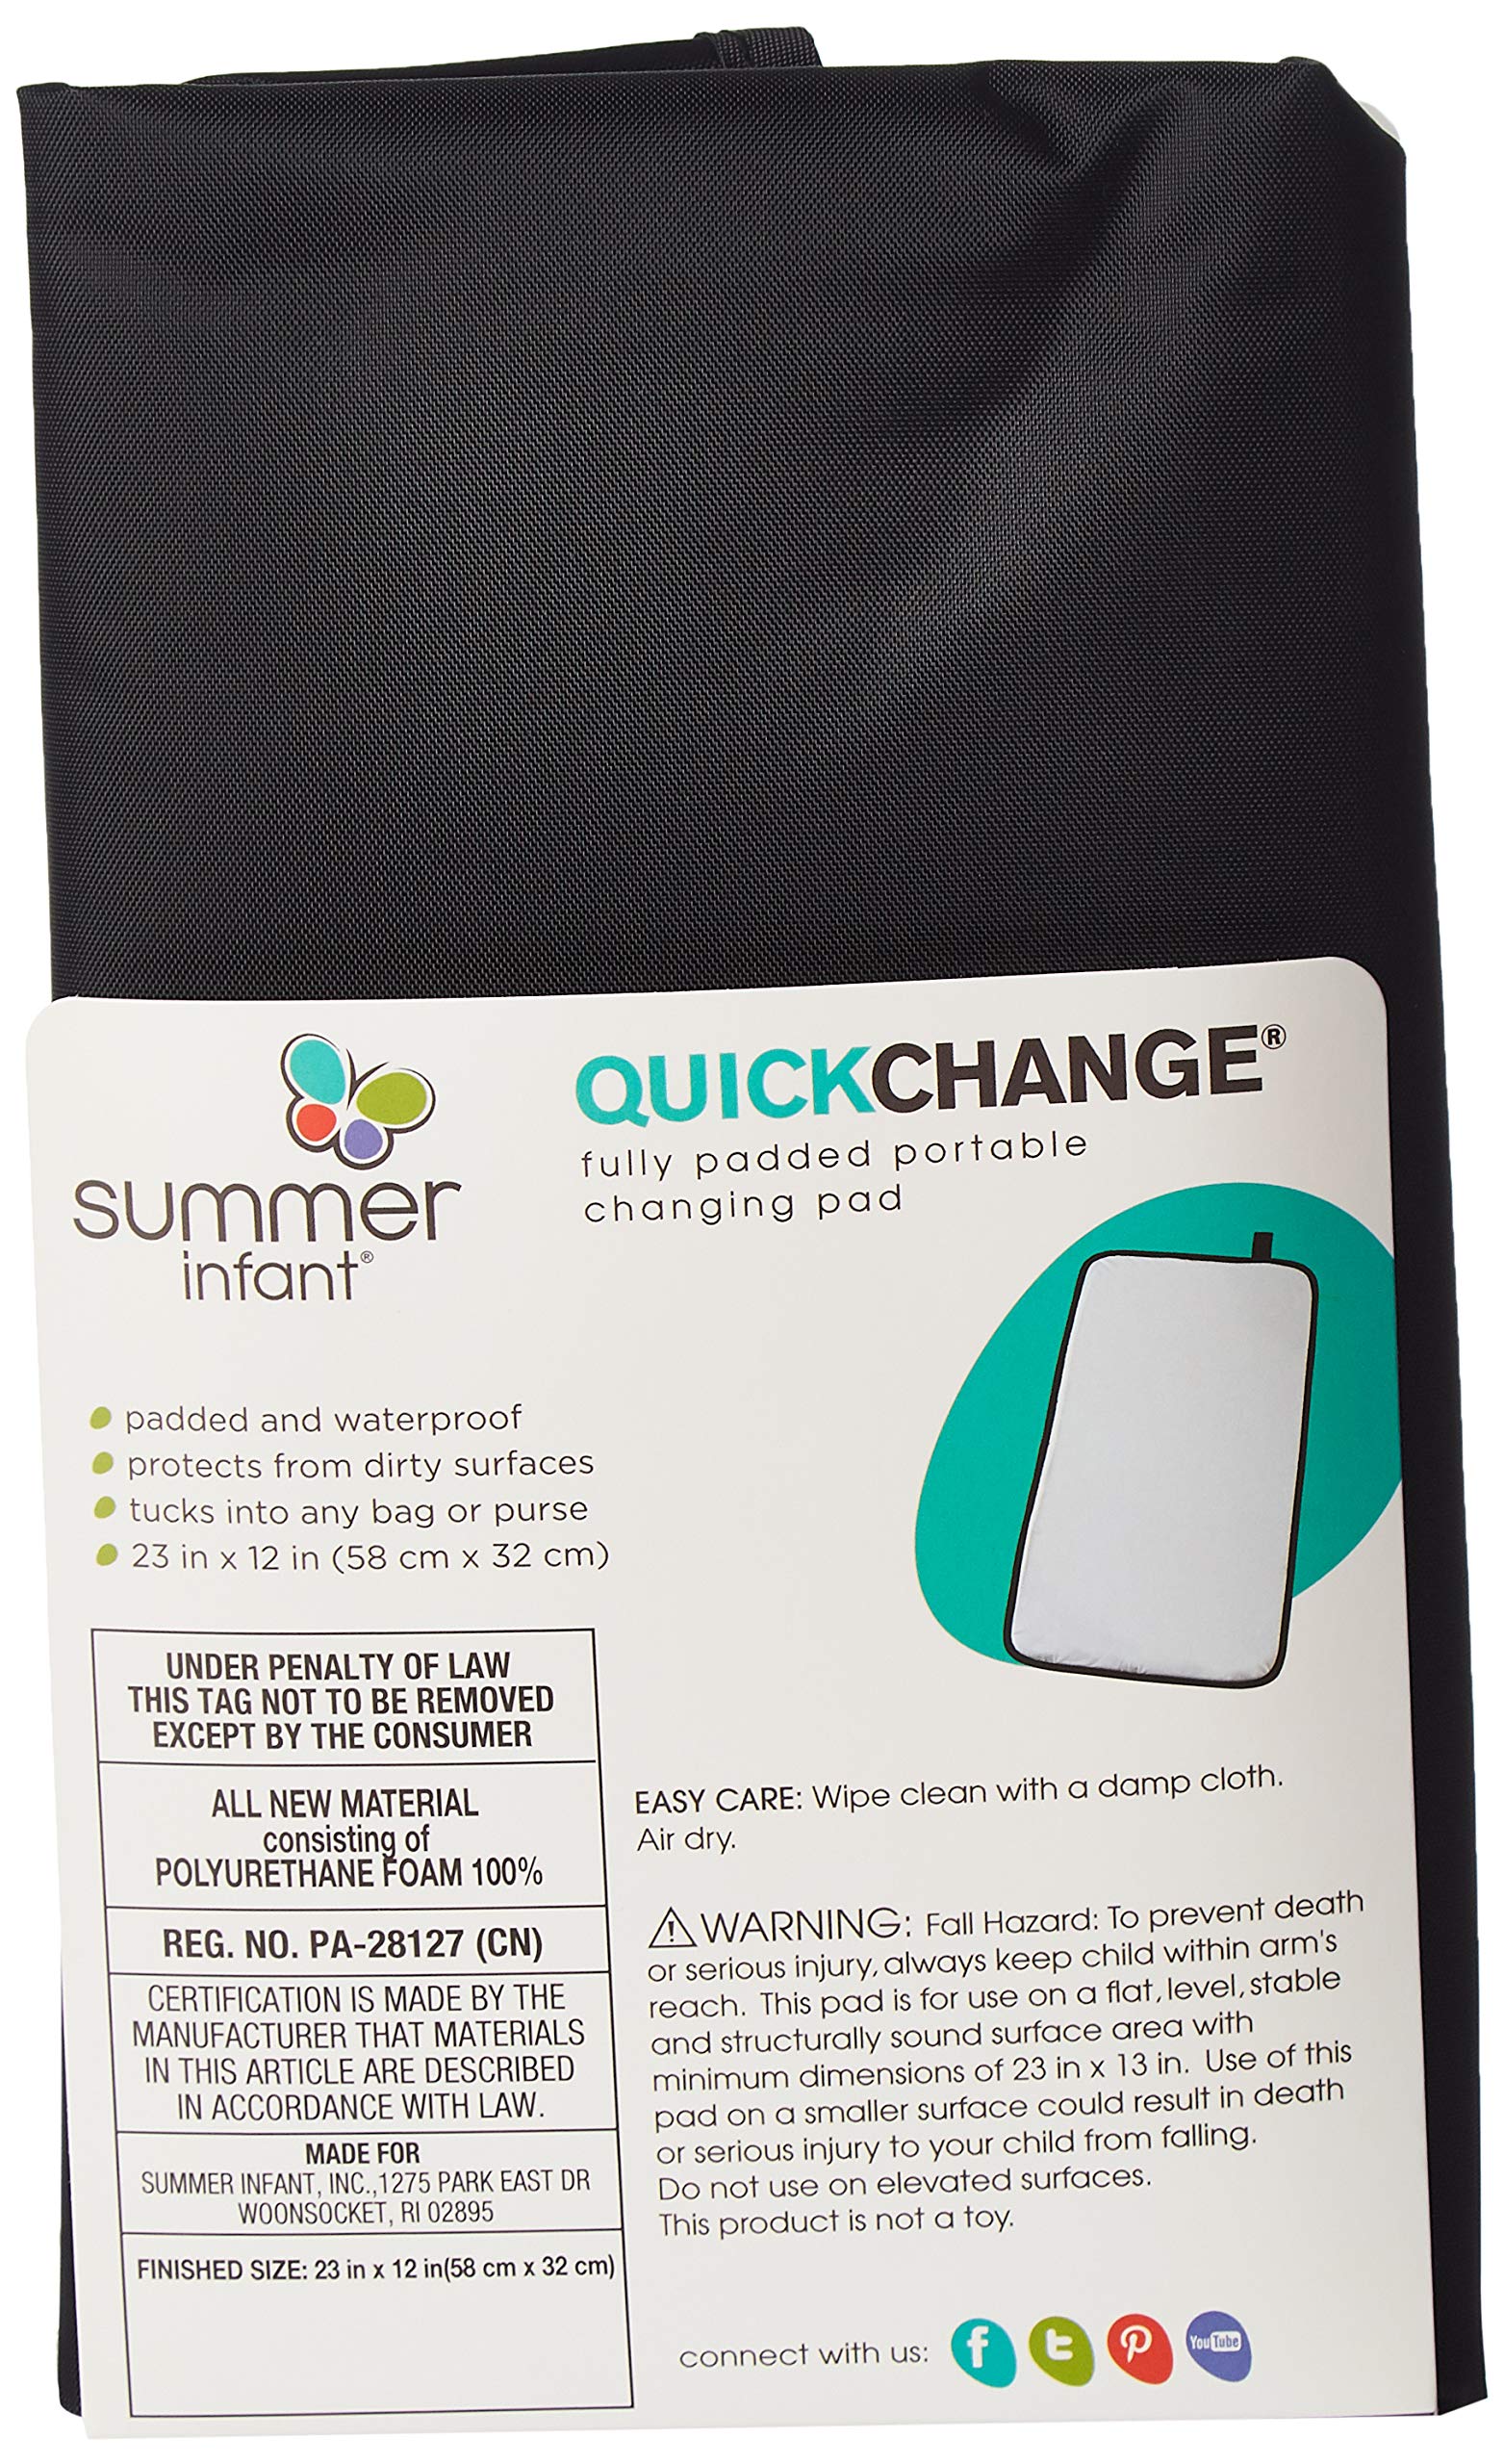 Summer Infant Quickchange Portable Changing Pad, Black